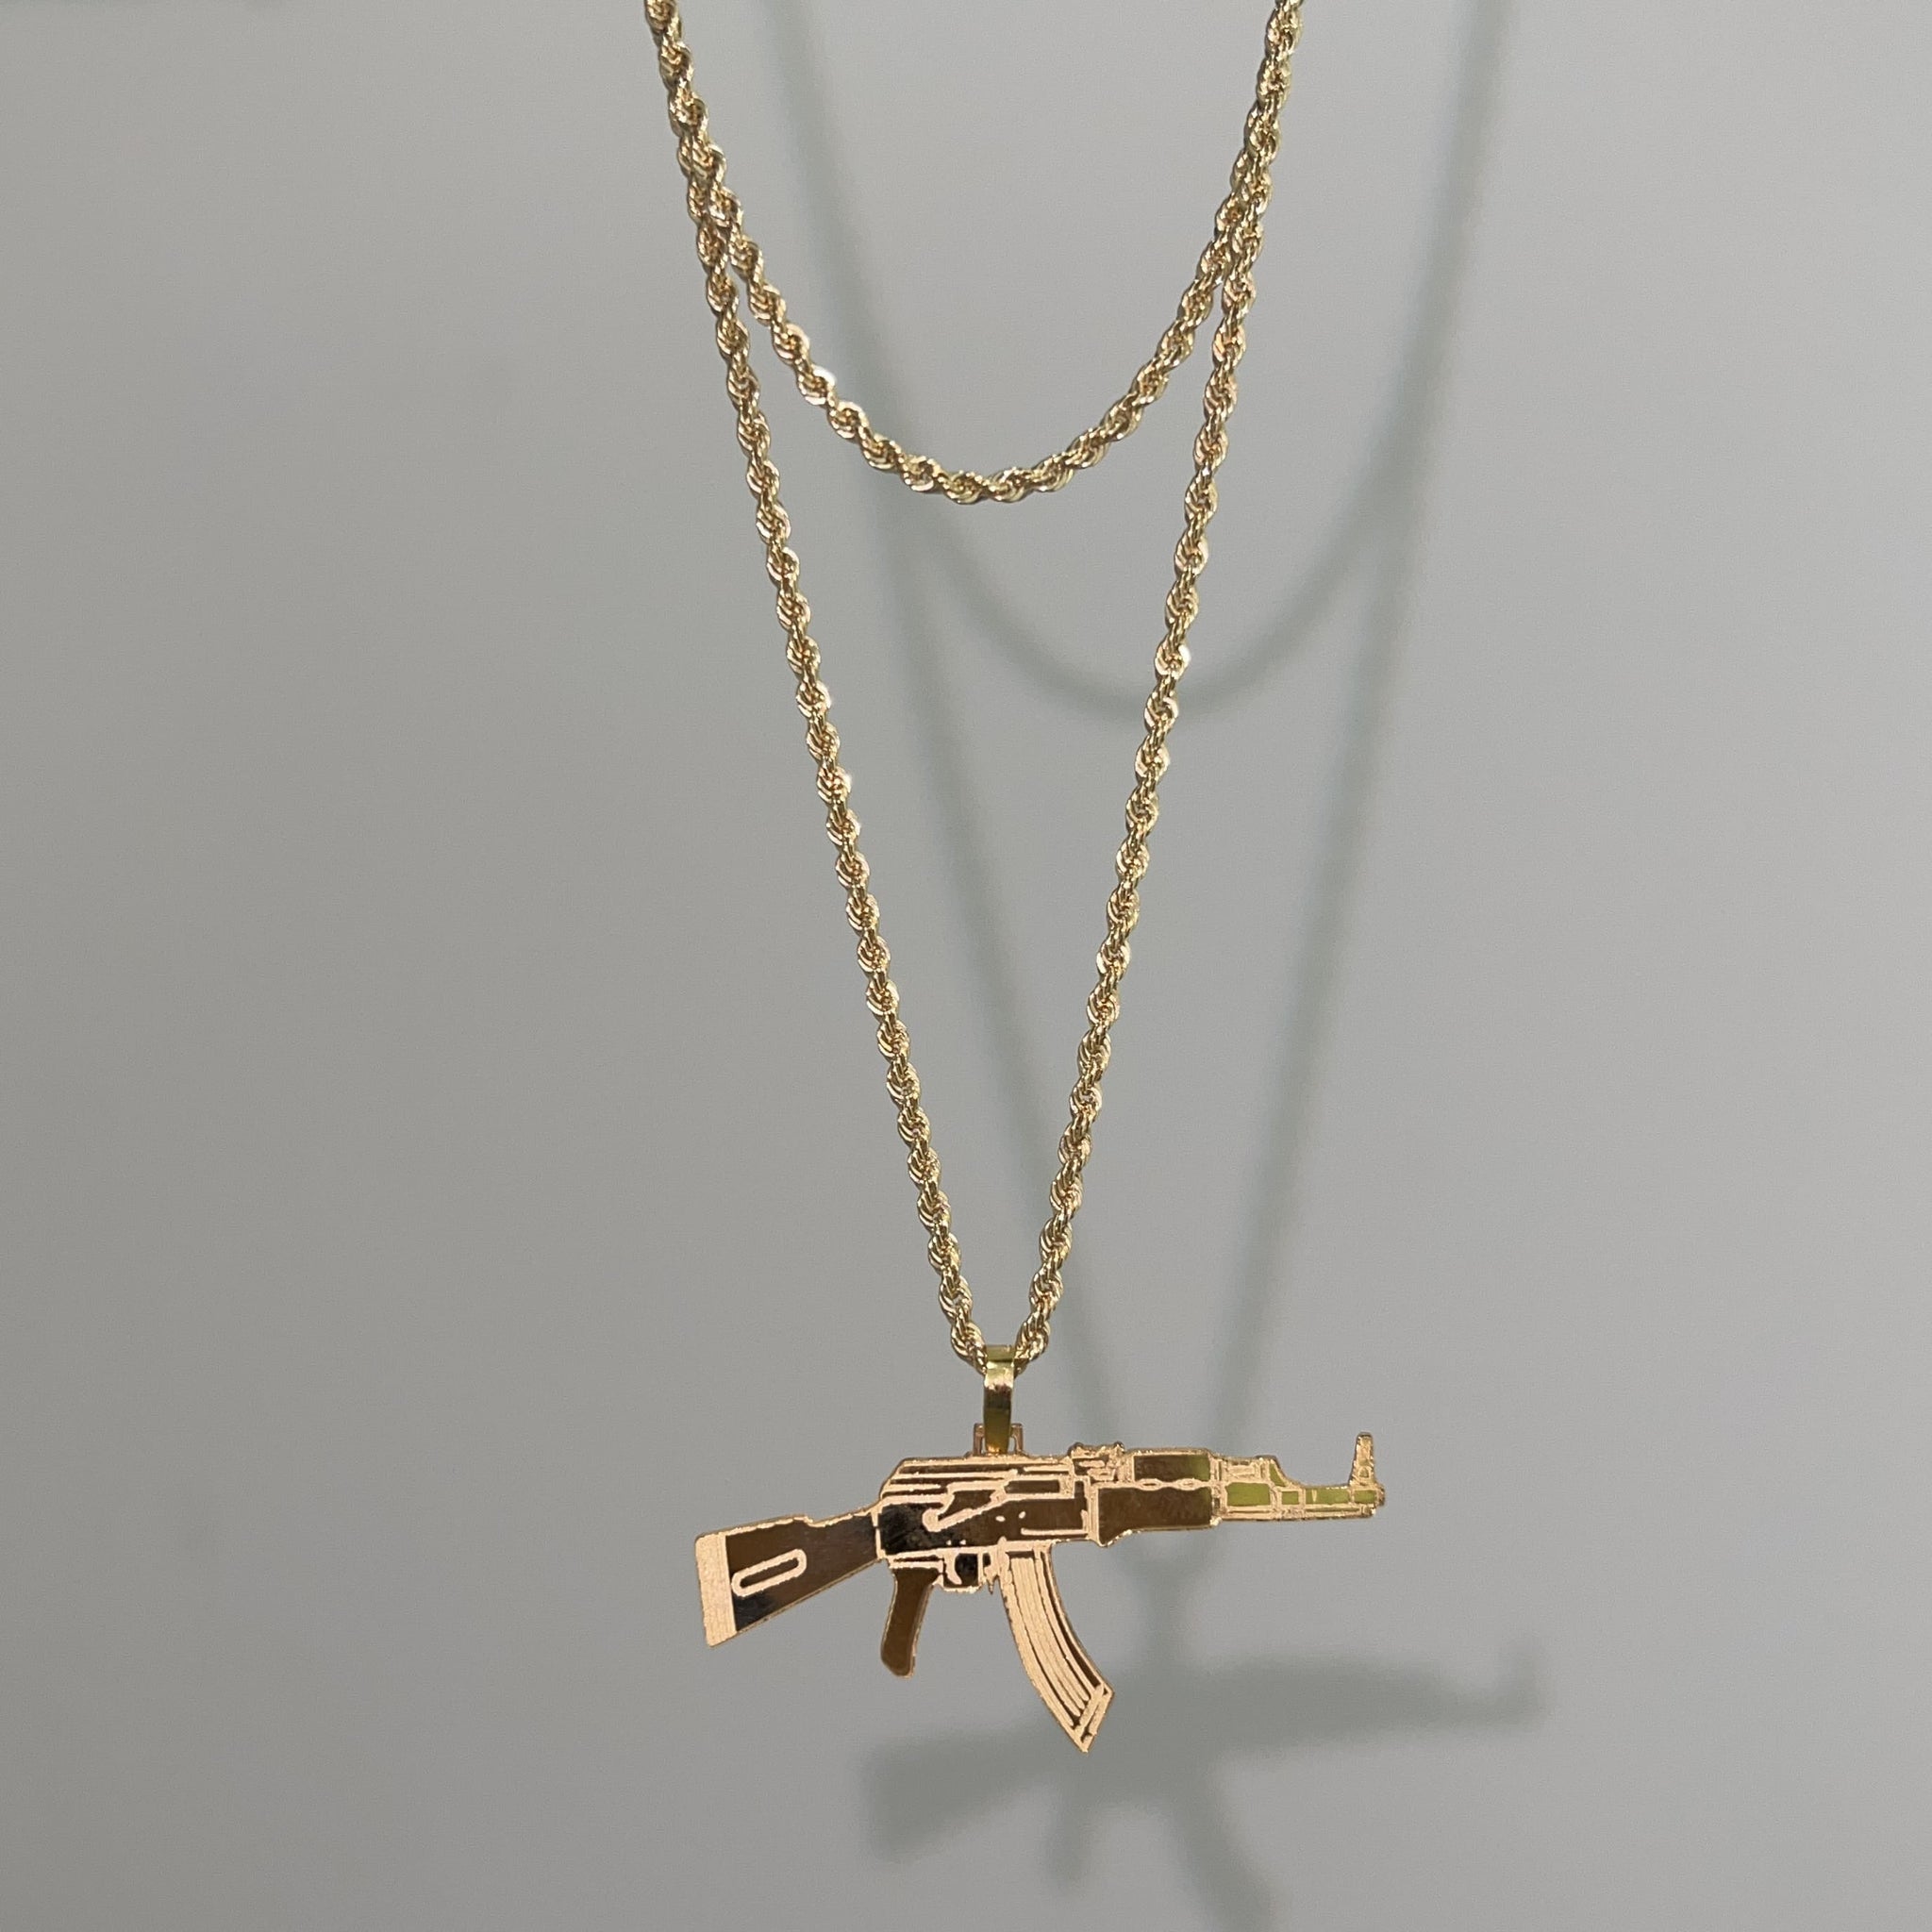 Rope Chain + AK47 Pendant - 14 carat gold - 2mm / 55cm